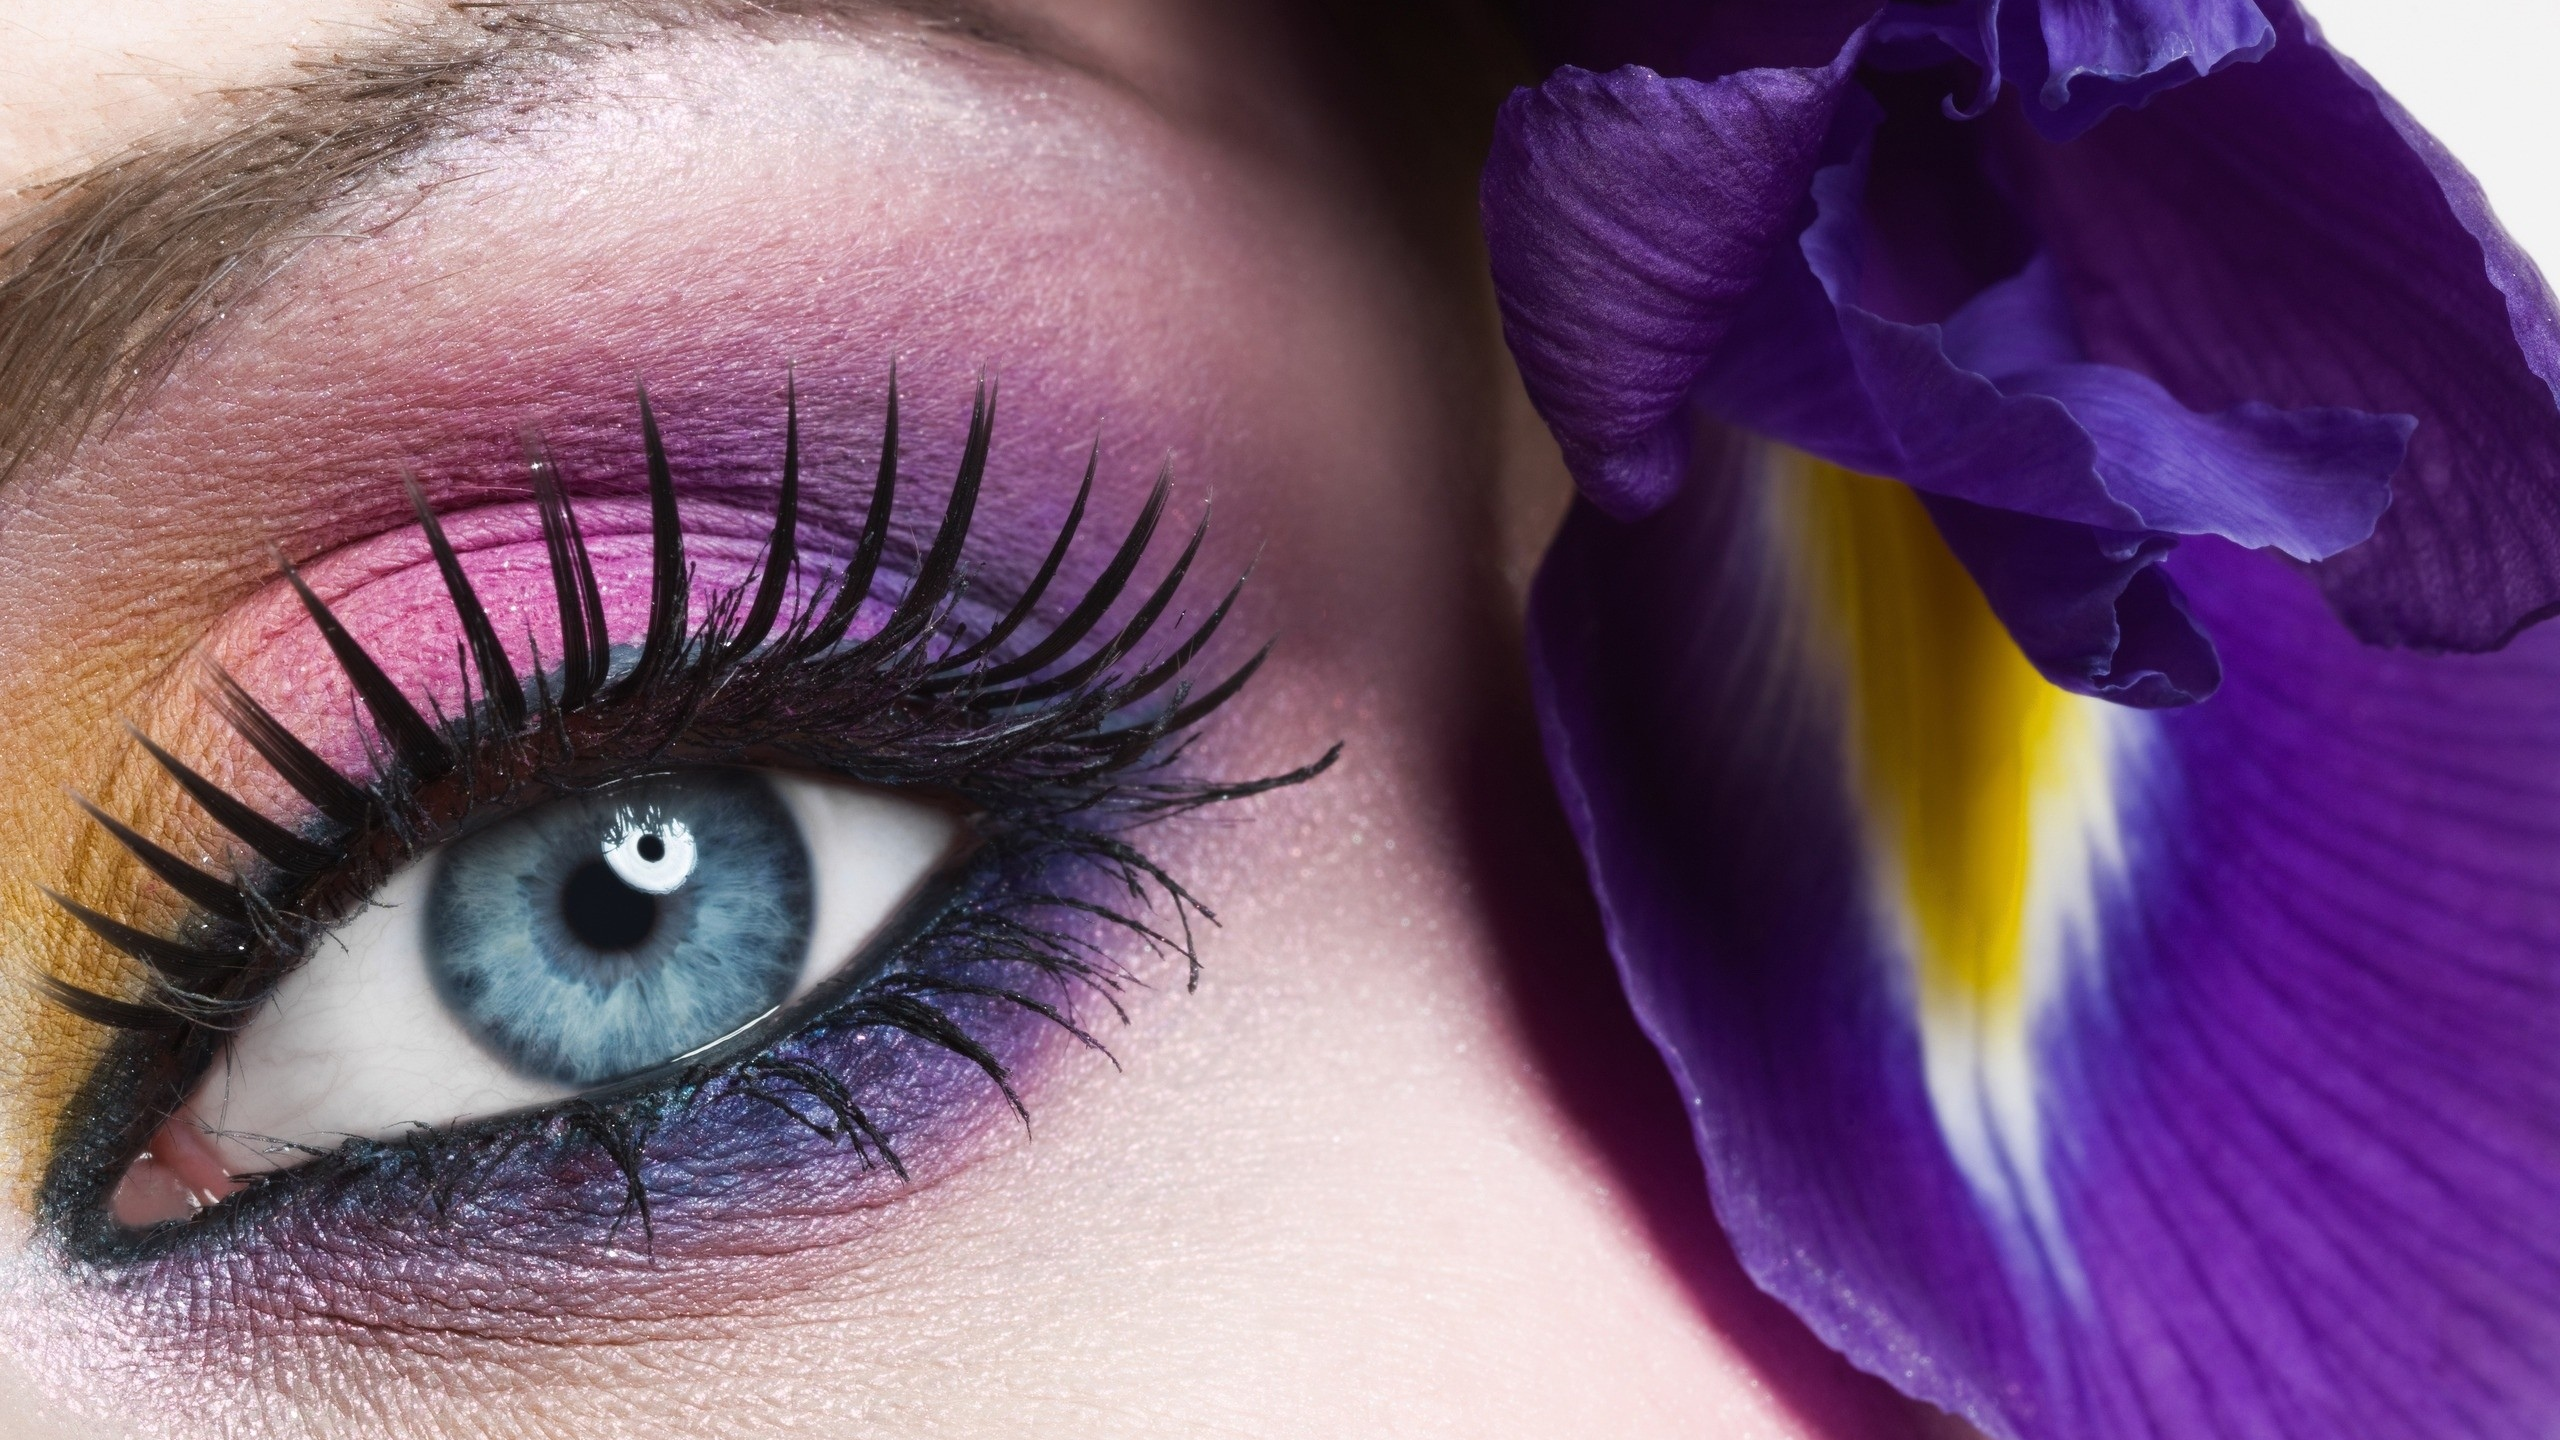 цветы, purple eyes, цвета, flowers, крупный план, розовые, purple hair, colors, голубые глаза, фиолетовые глаза, blue eyes, macro, pink, фиолетовые волосы, макро, close-up, eyes, глаза